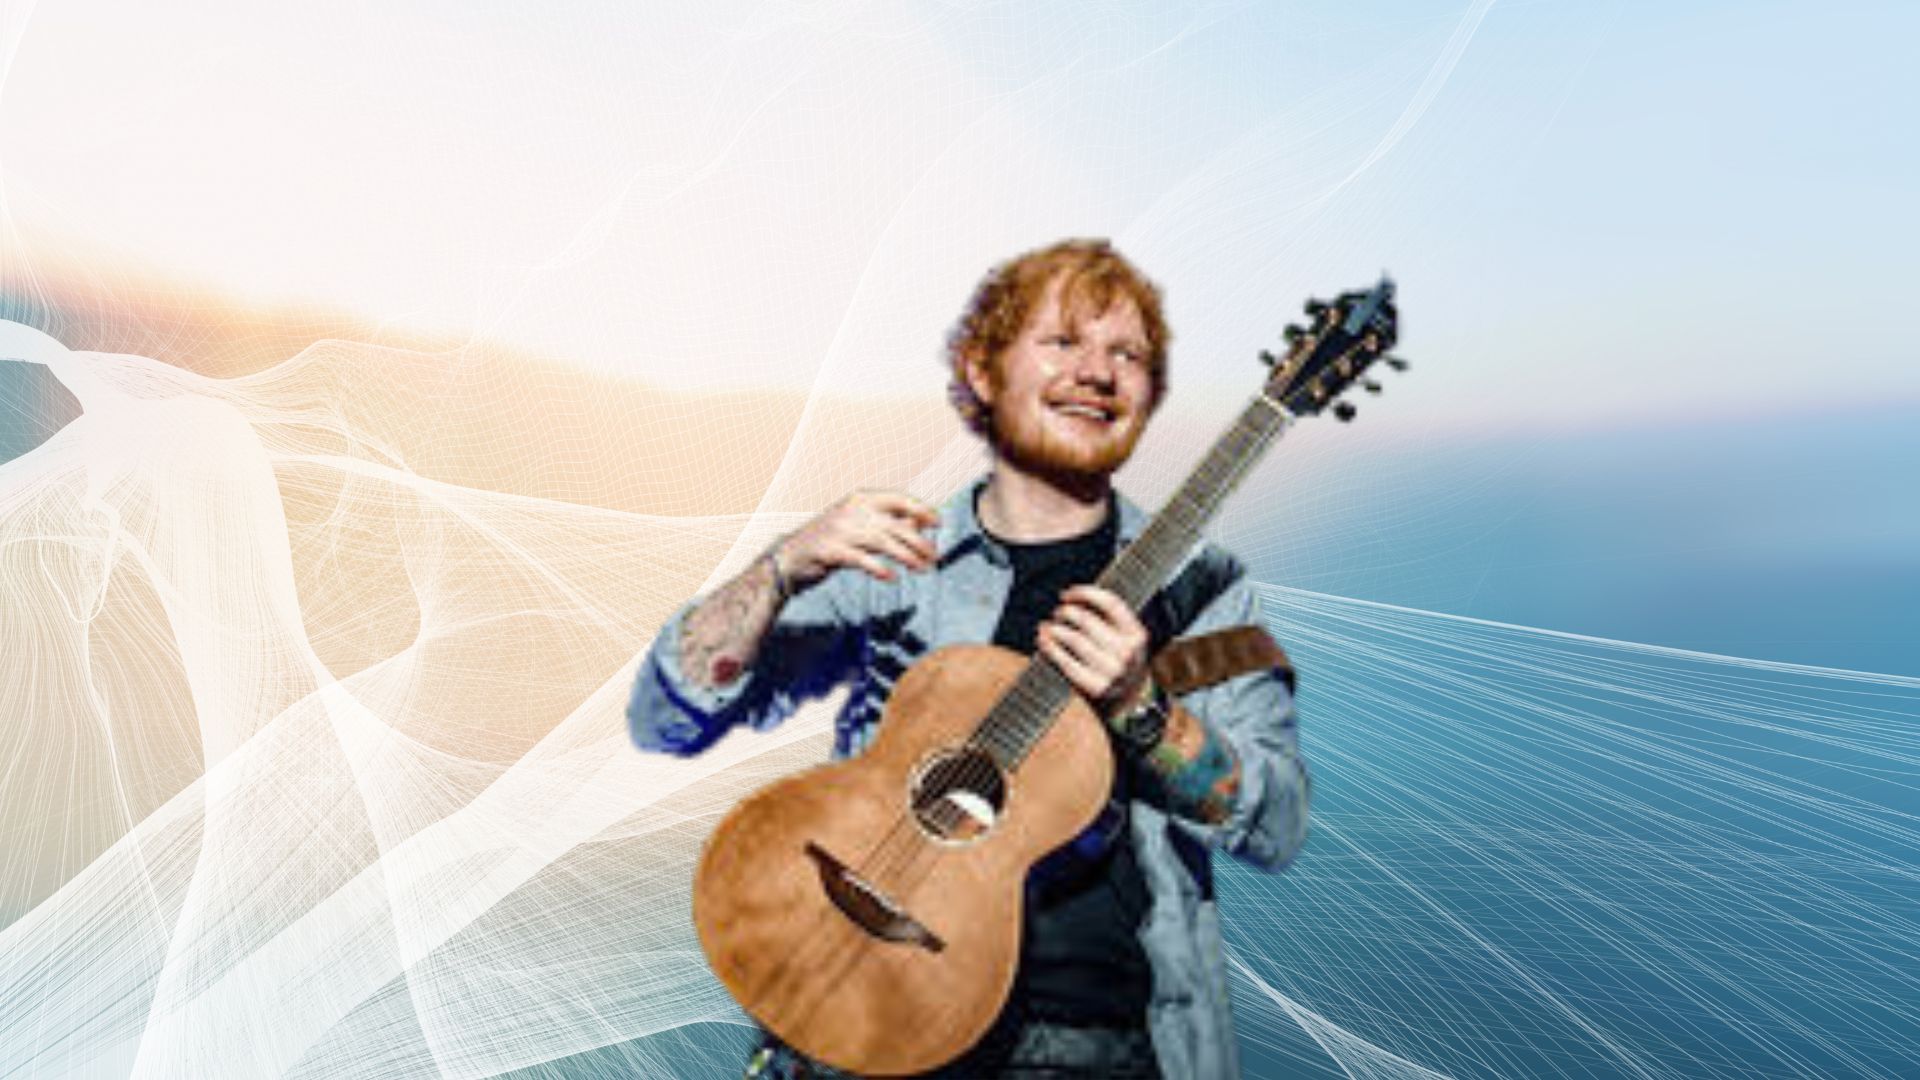 Ed Sheeran Captures the Lovestruck Jitters in Sweet New Single